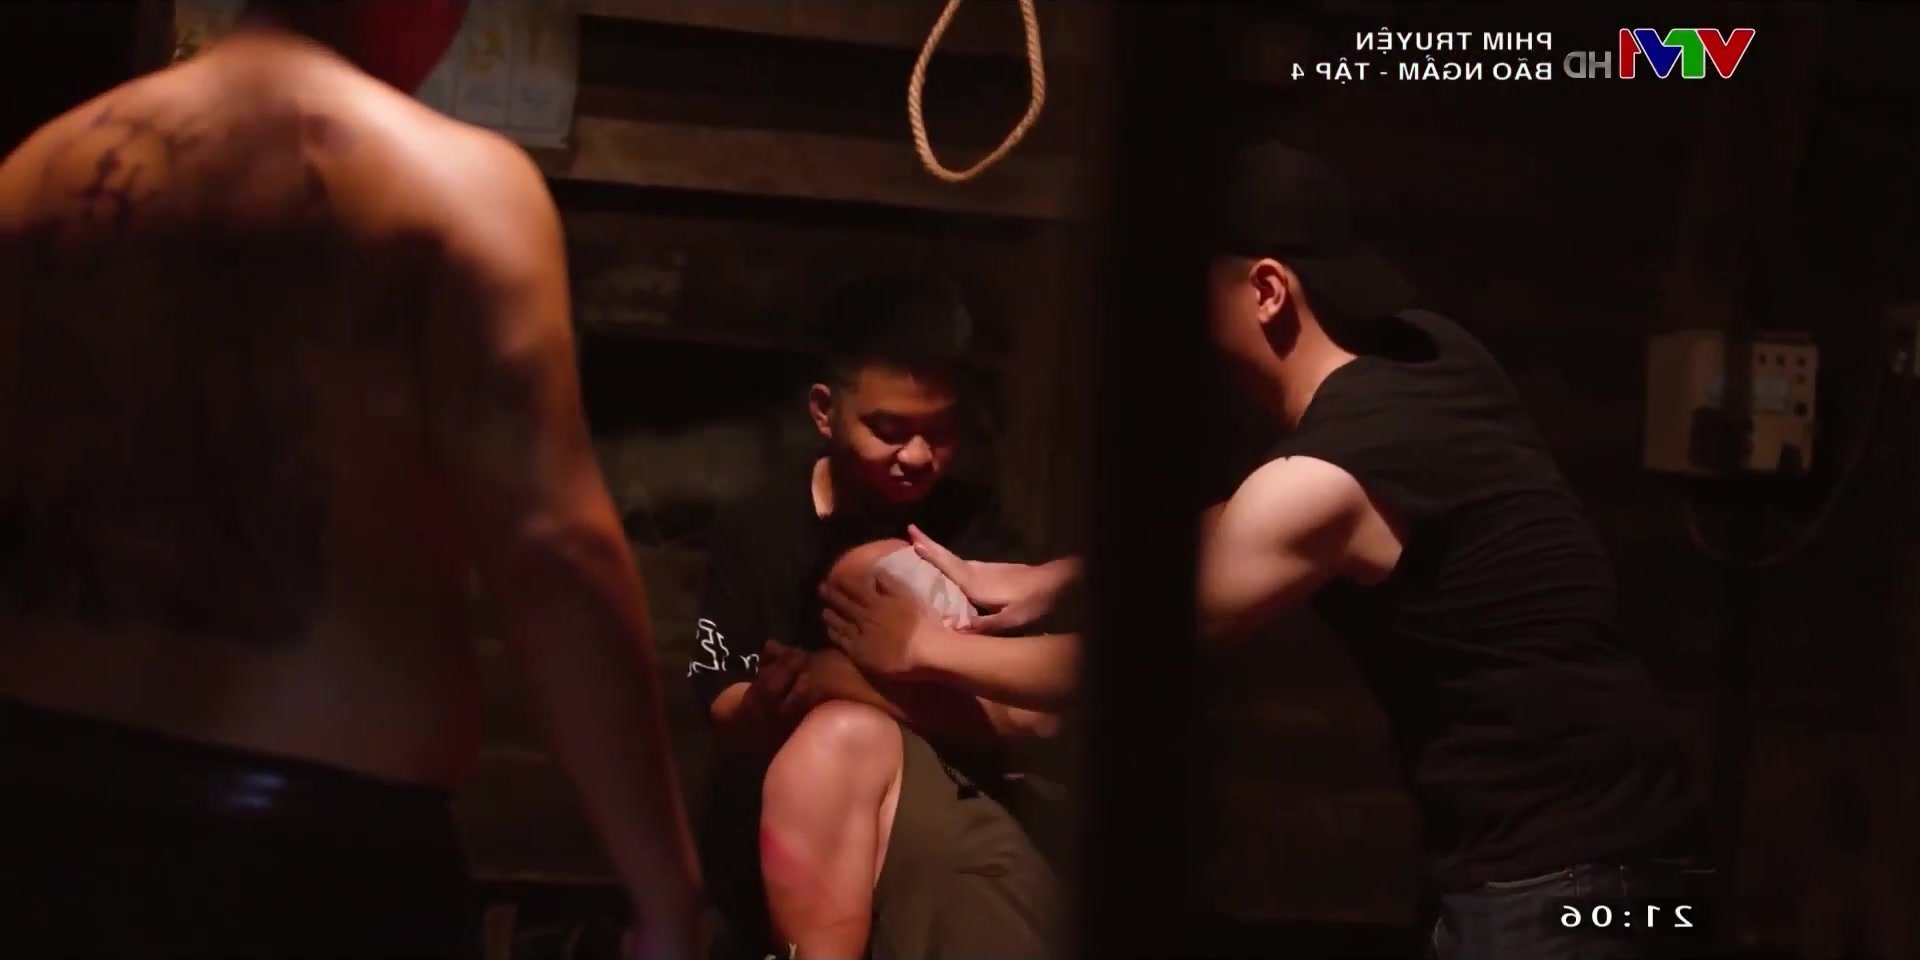 Man was tortured until he fainted (Movie scene)